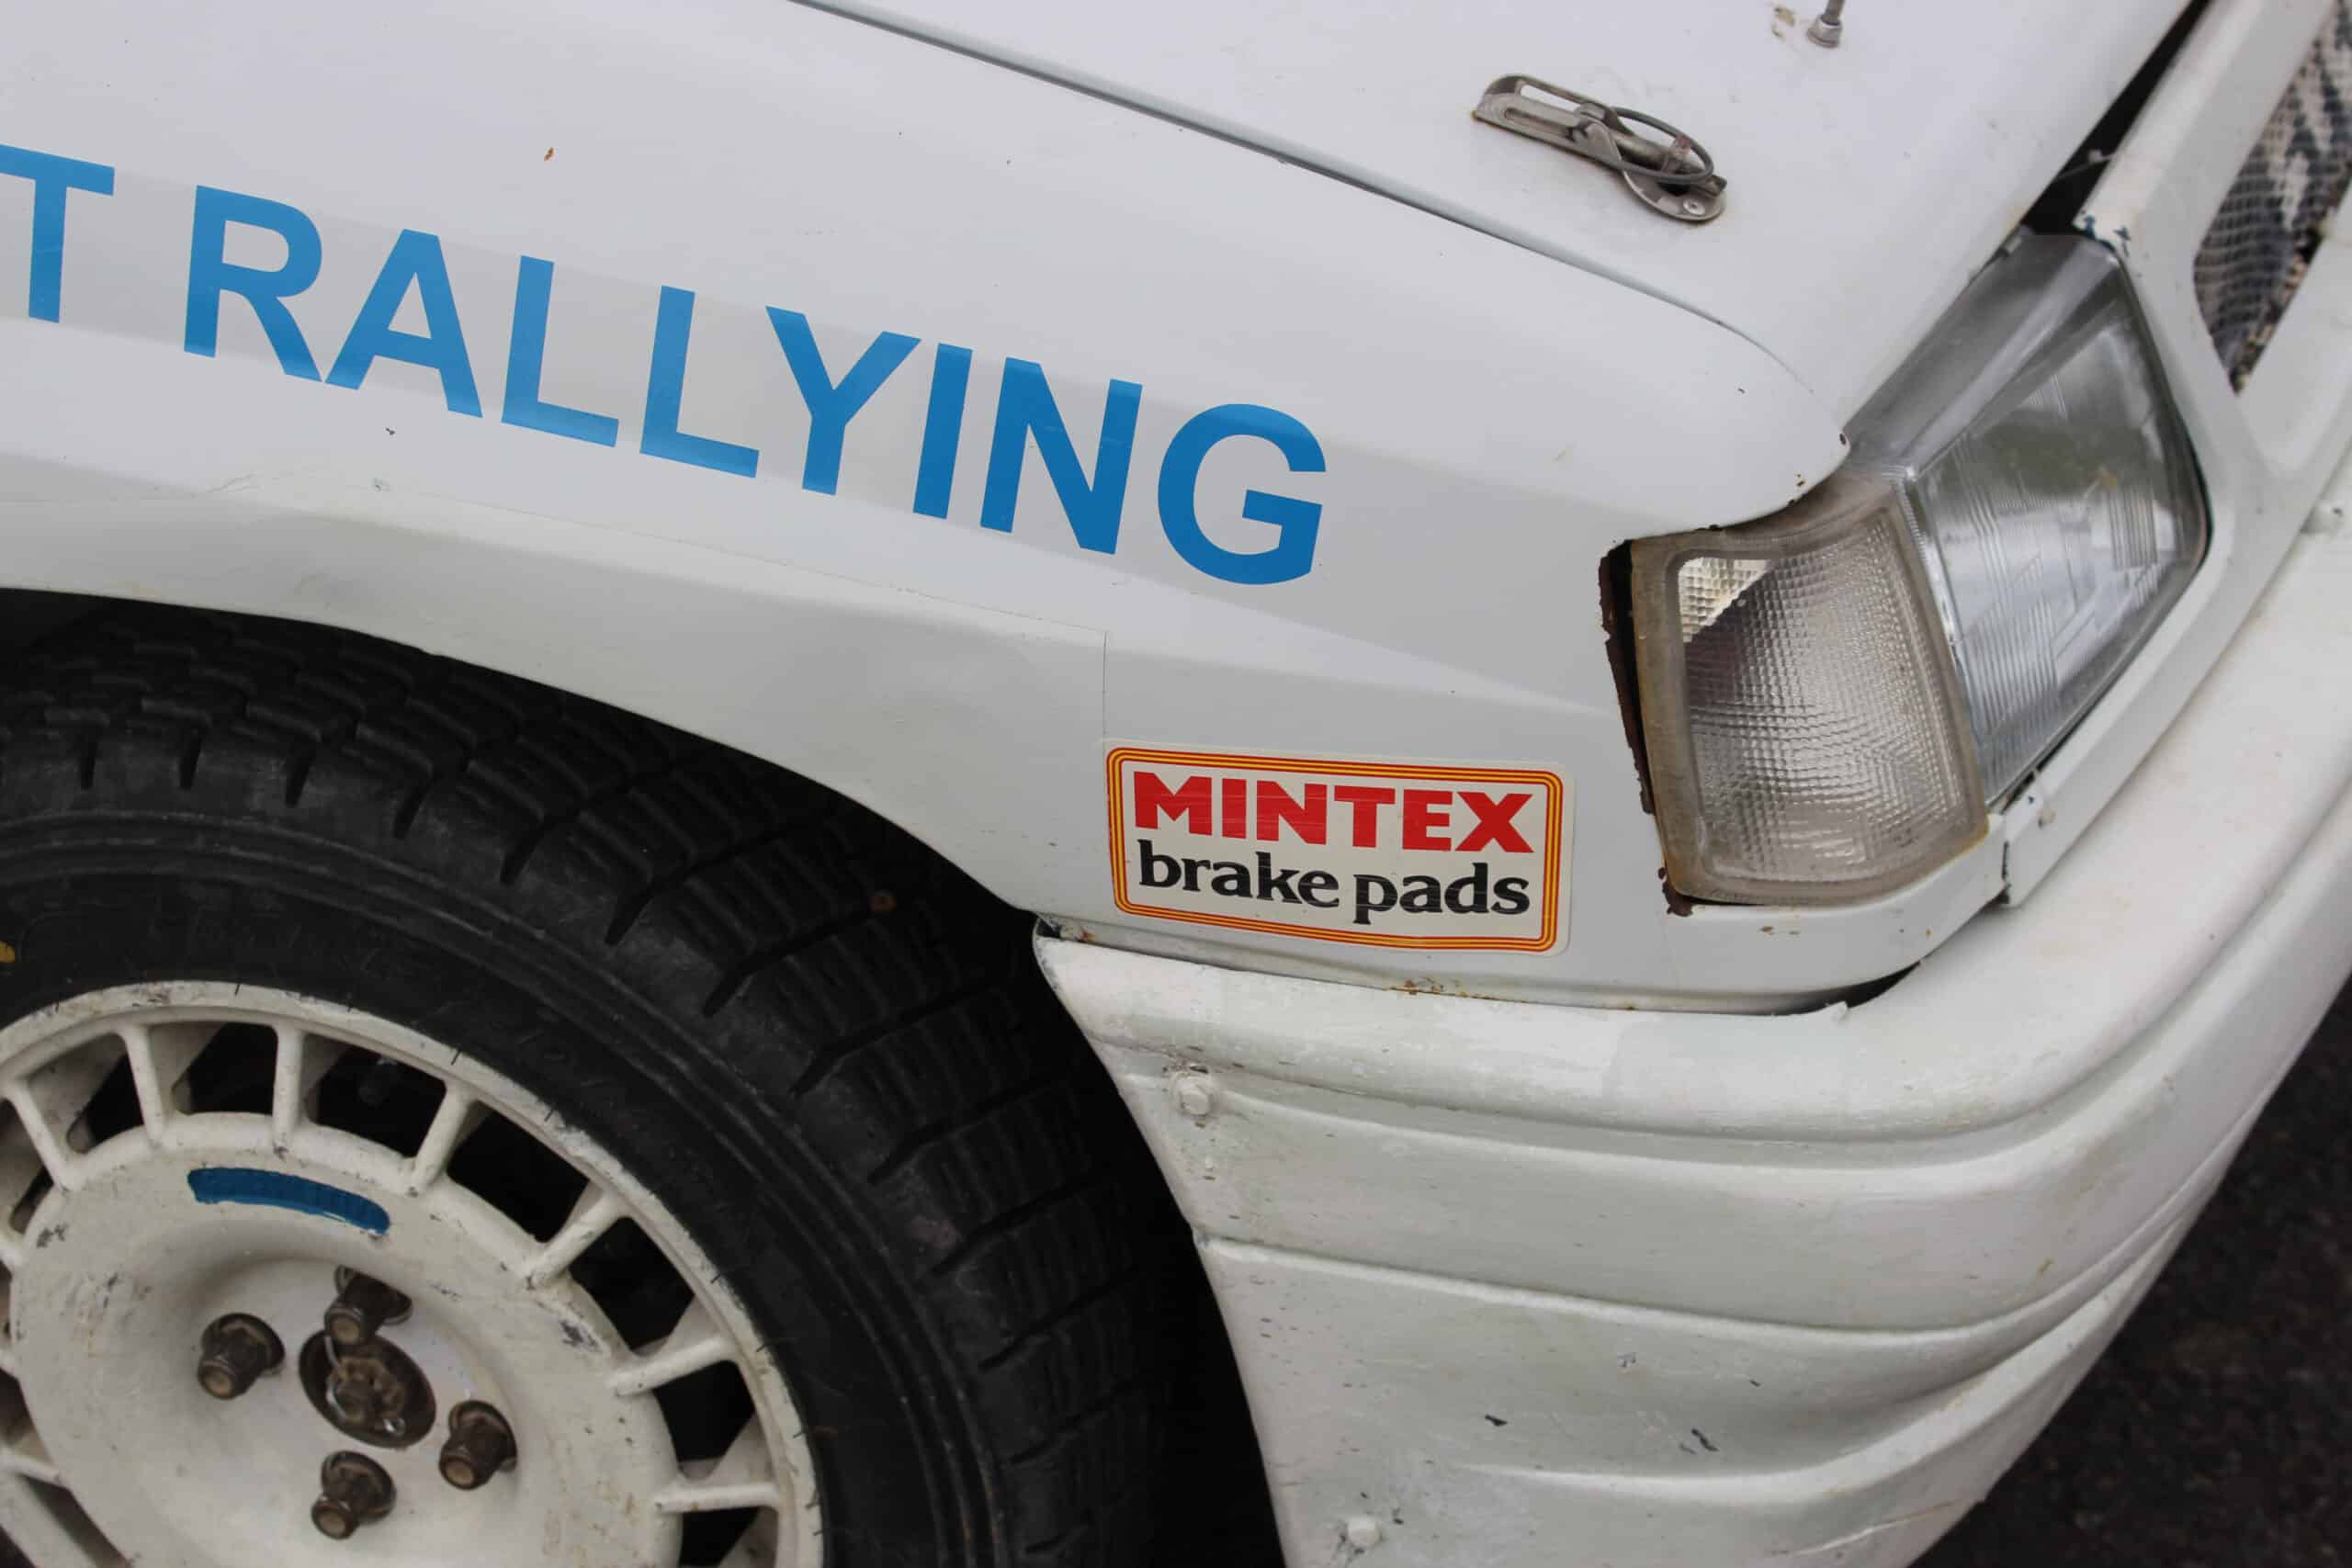 Mintex supplied brakes for U.K.. historic rally cars